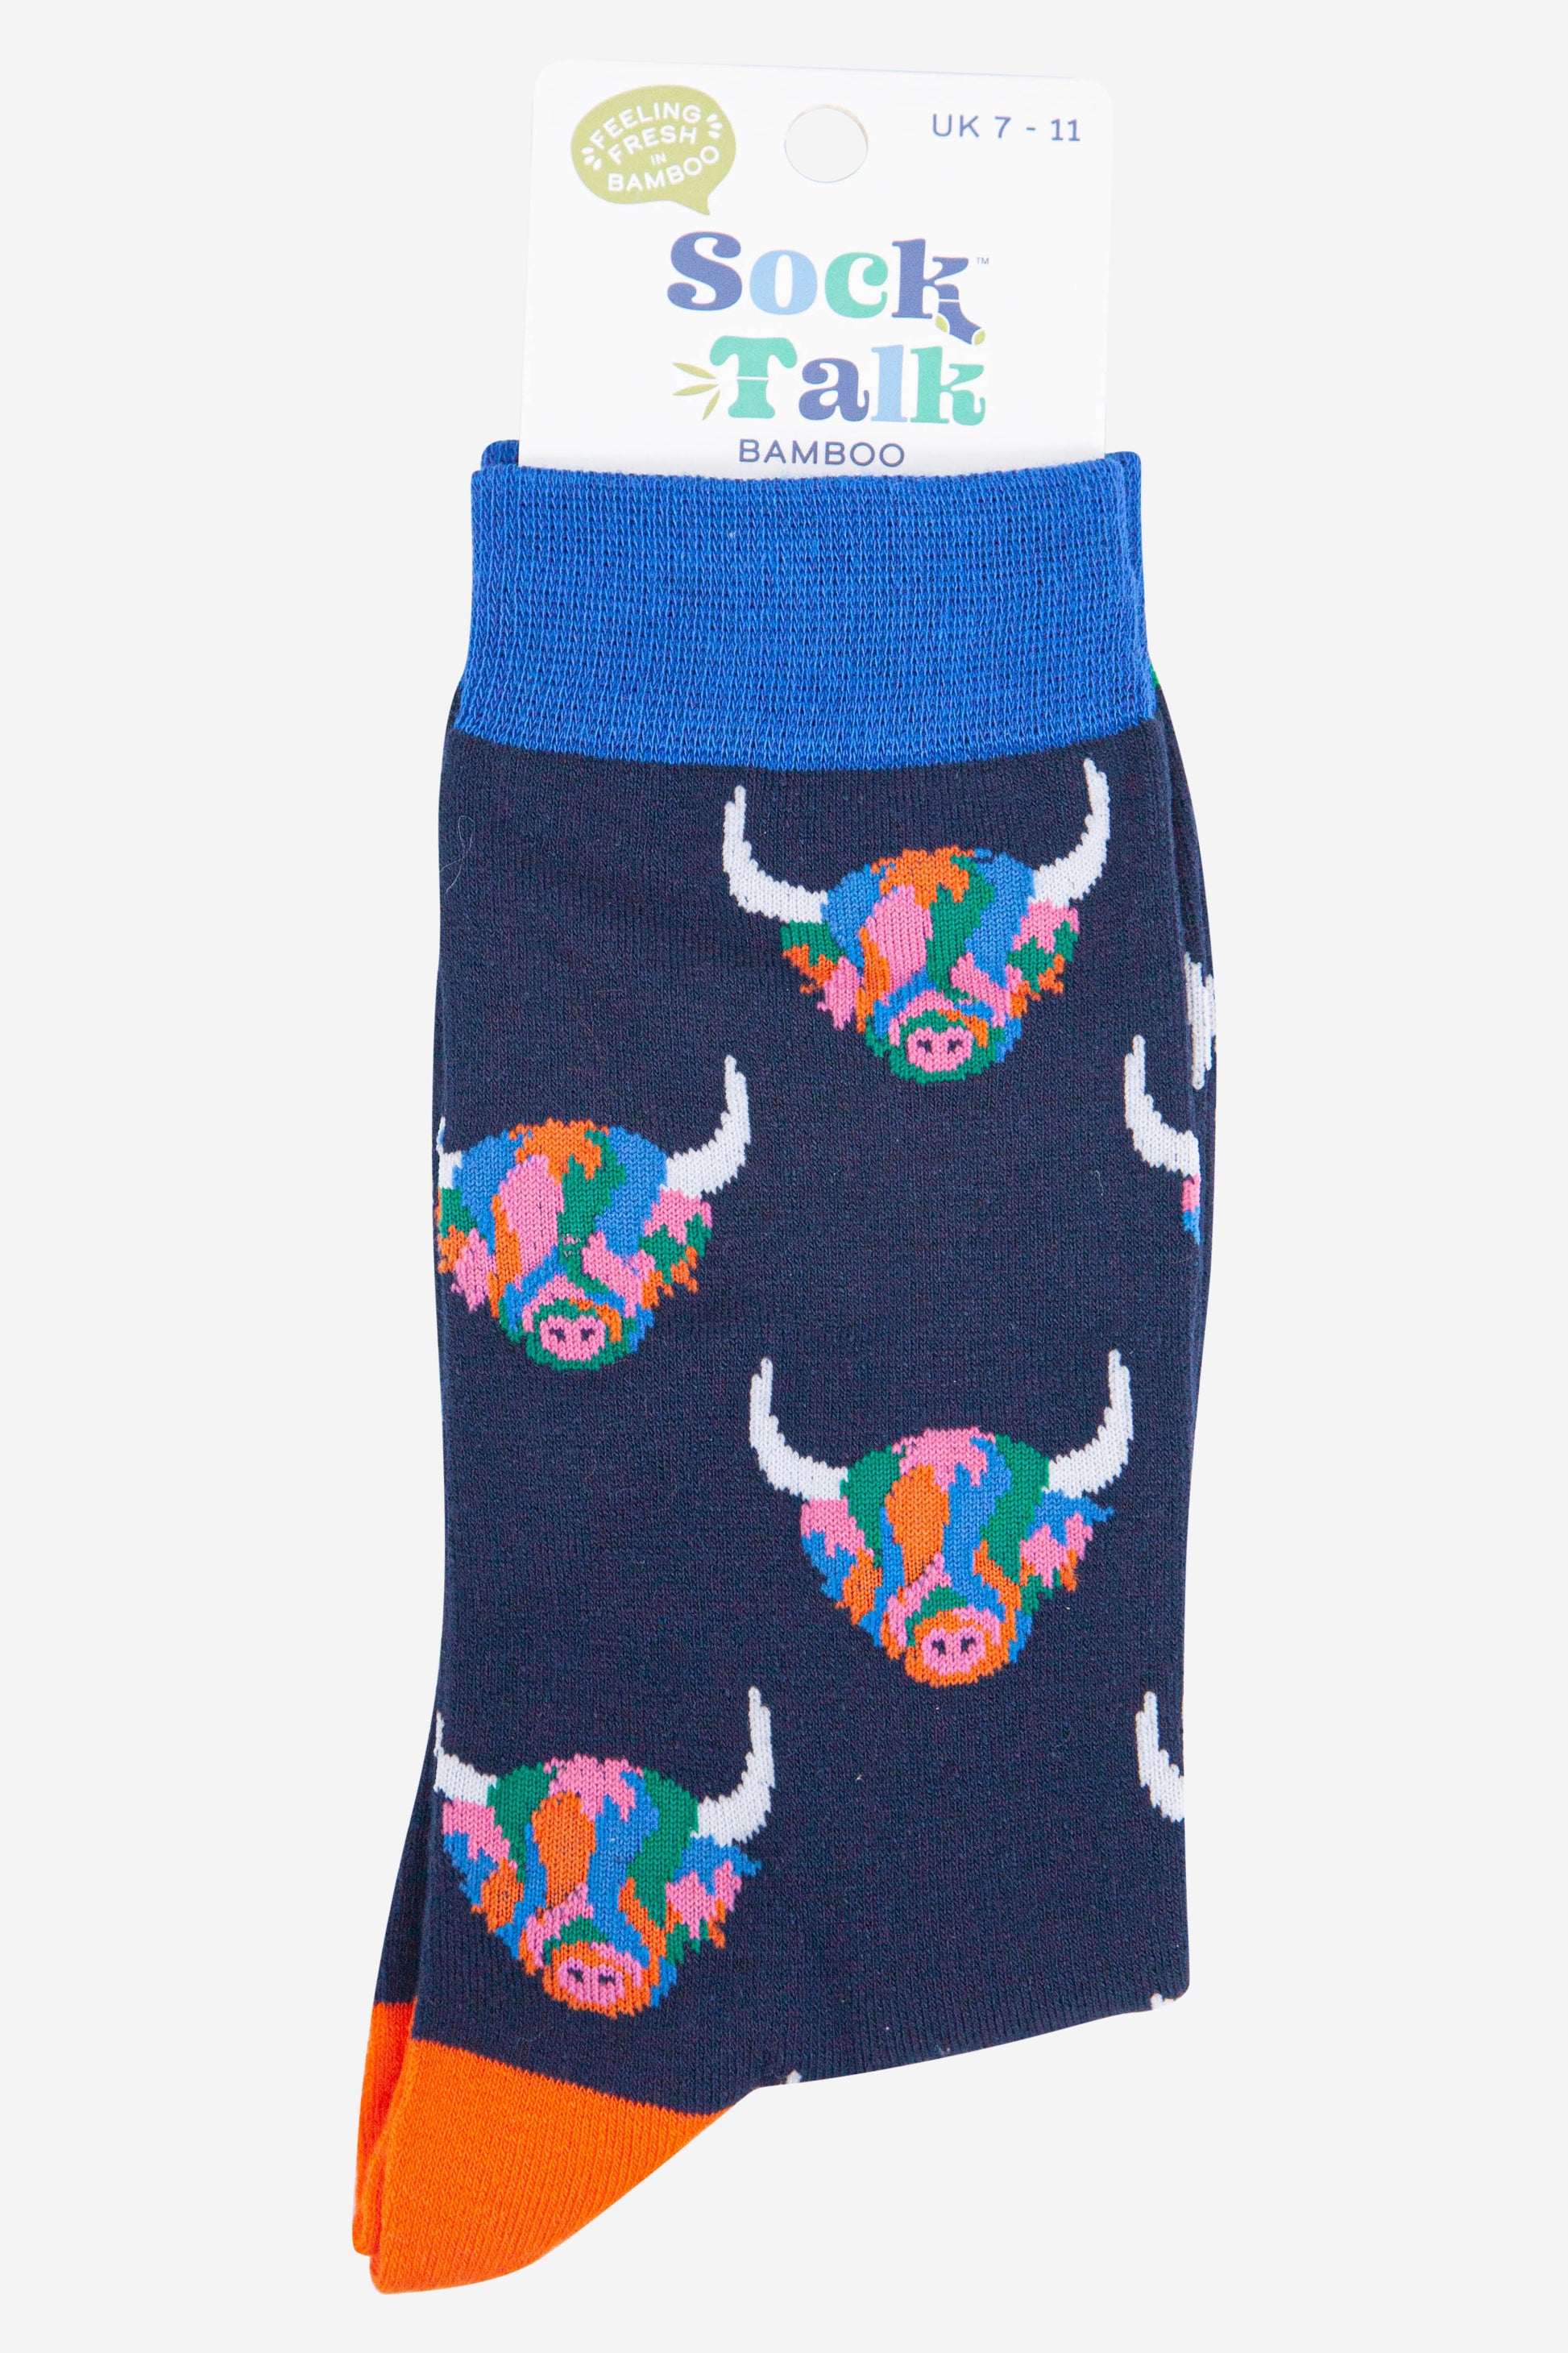 mens navy blue rainbow highland cow dress socks uk size 7-11